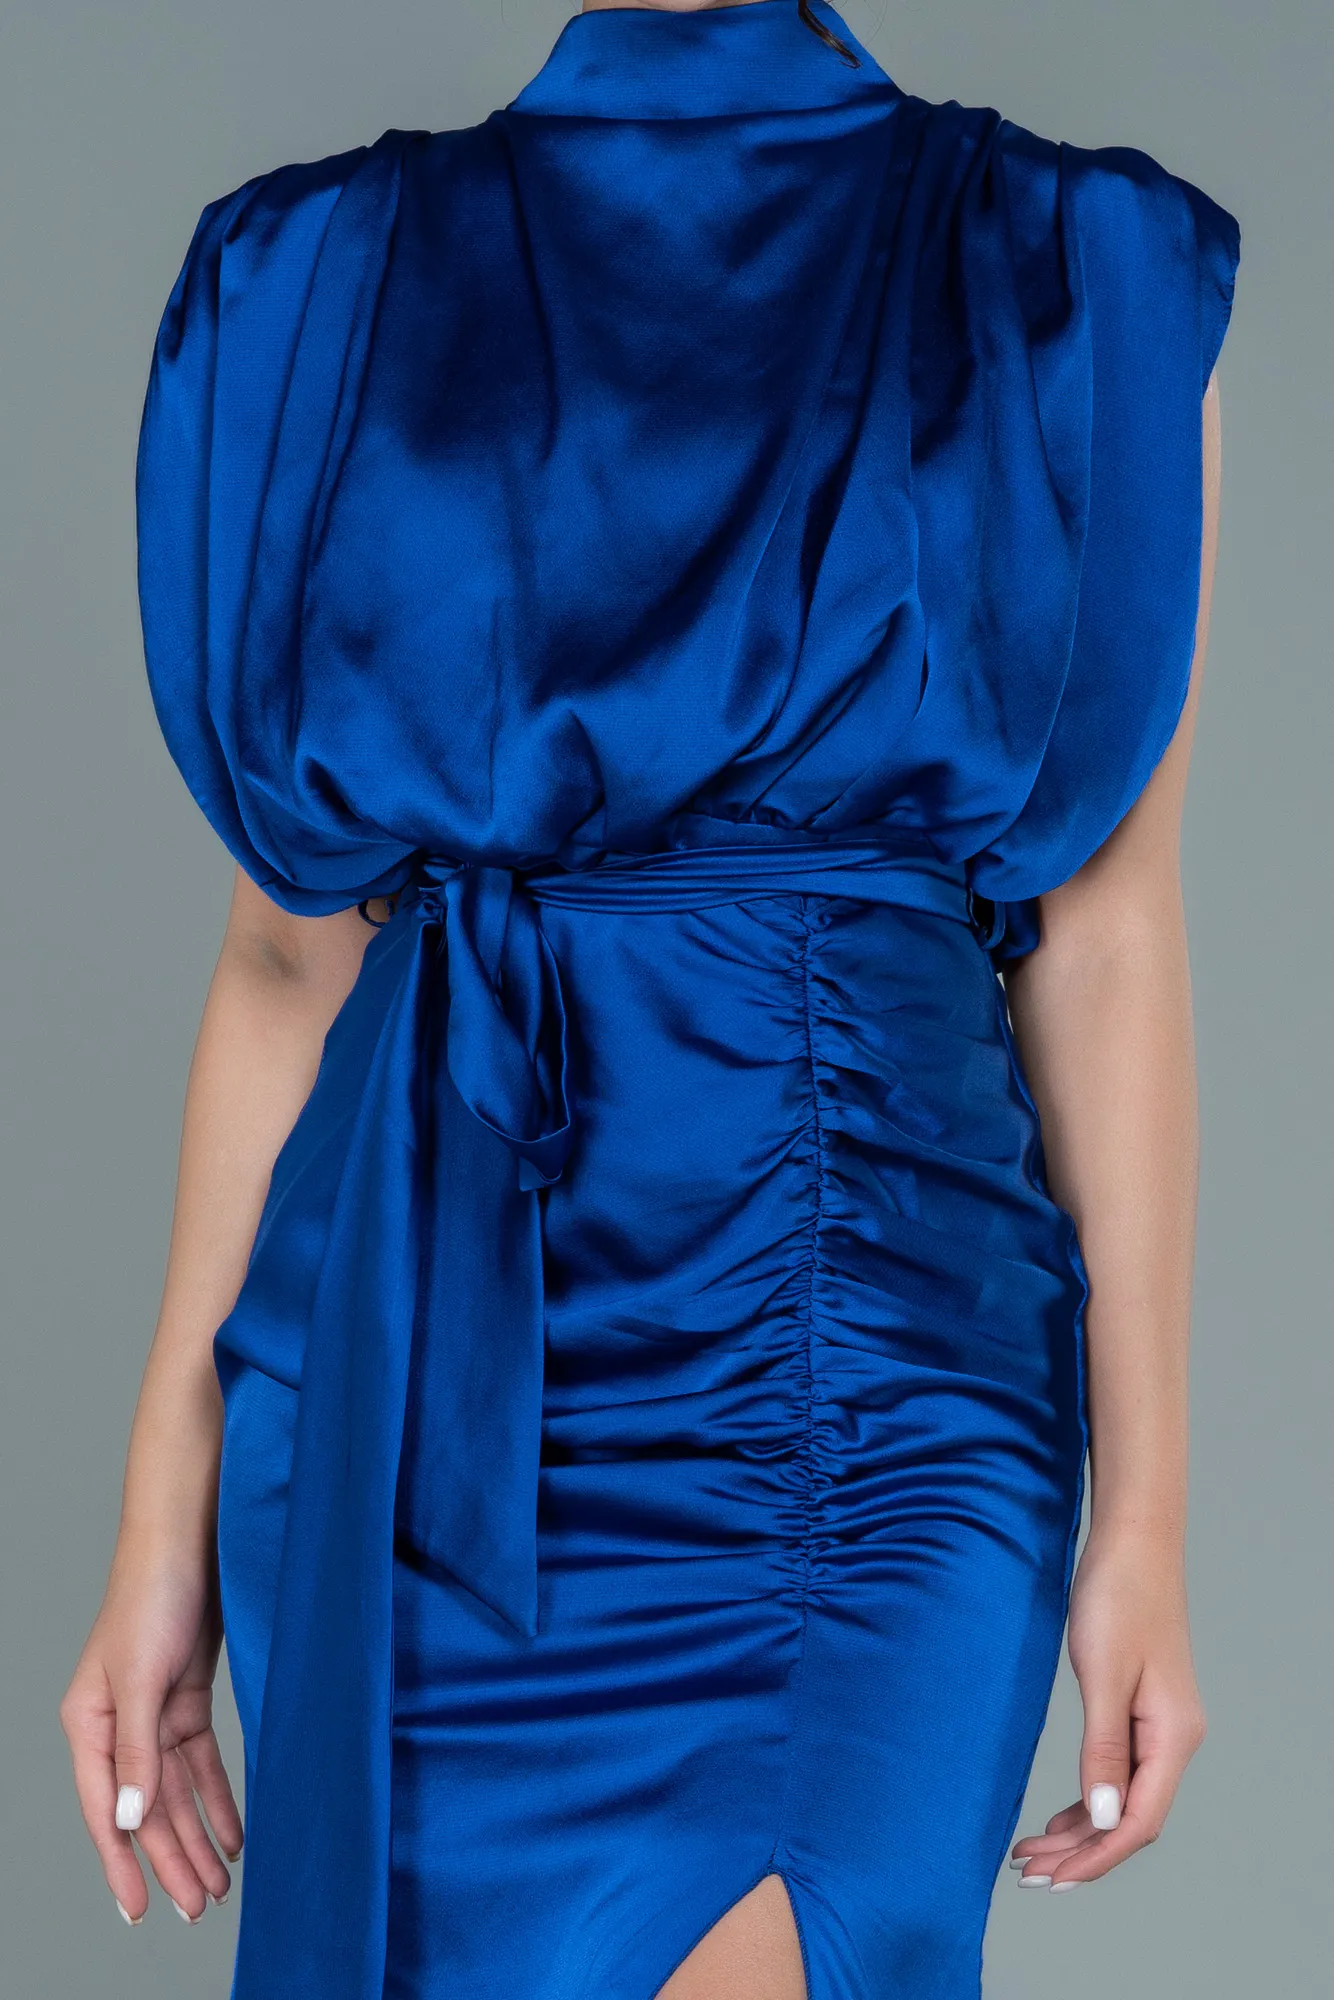 Sax Blue-Long Satin Evening Dress ABU2133